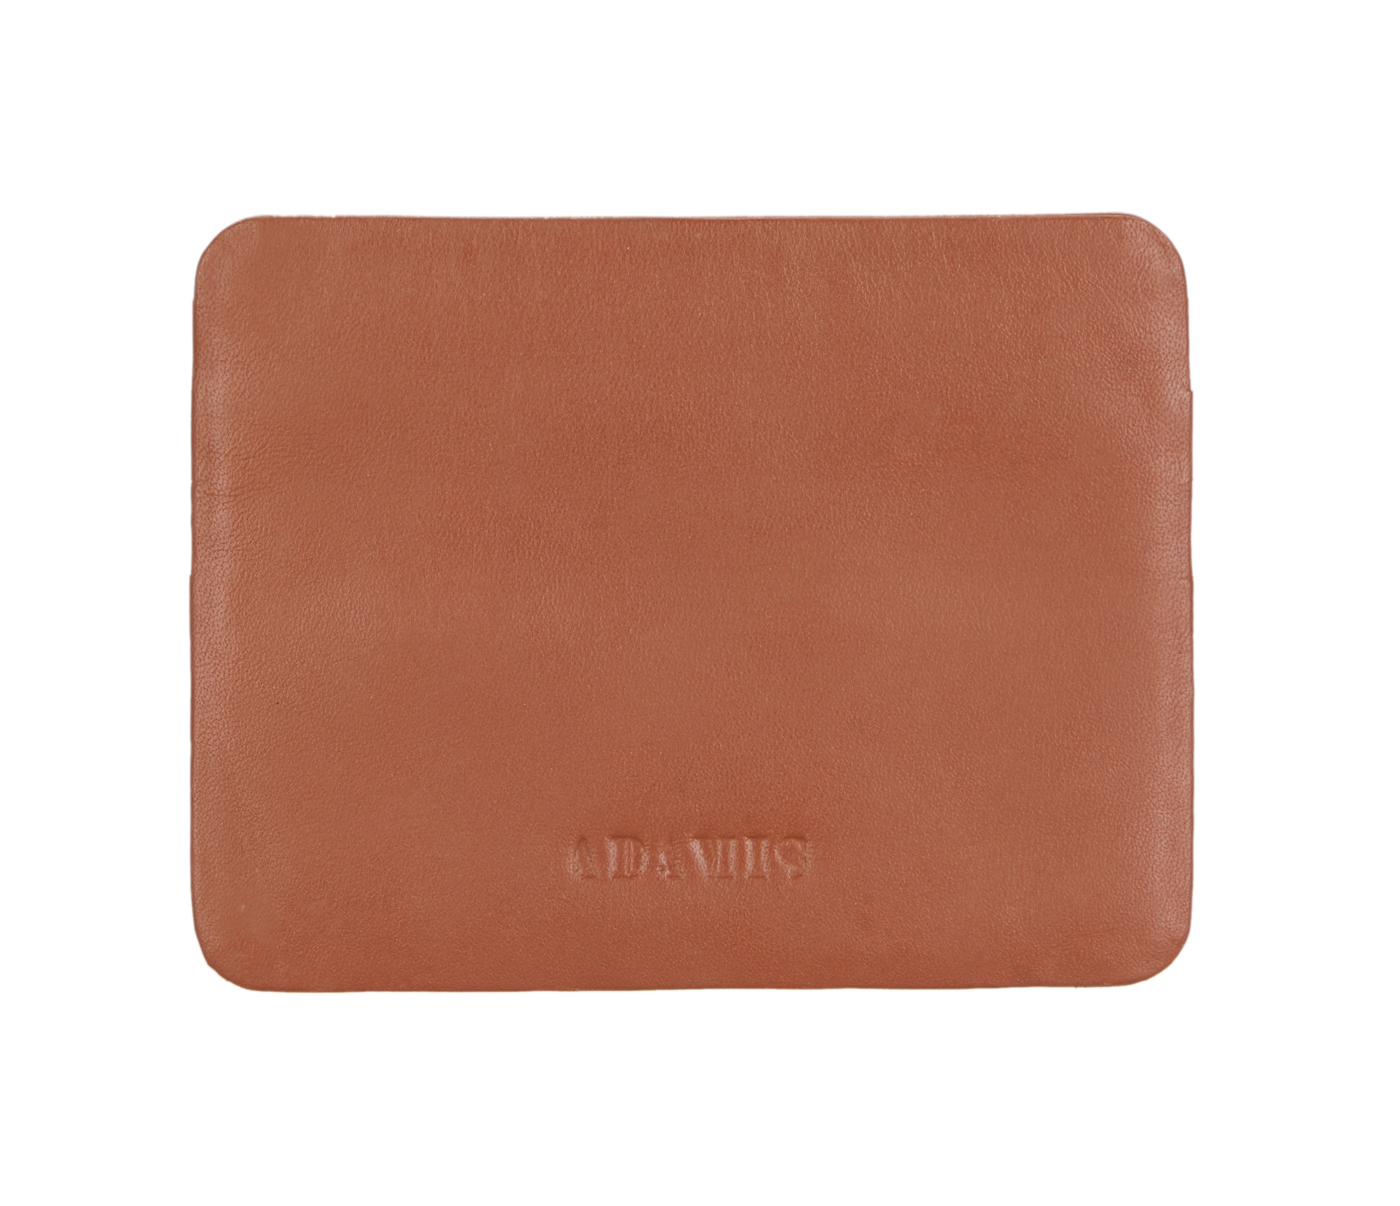 VW7--Ultra Slim Credit Card Case in Genuine Leather - Tan